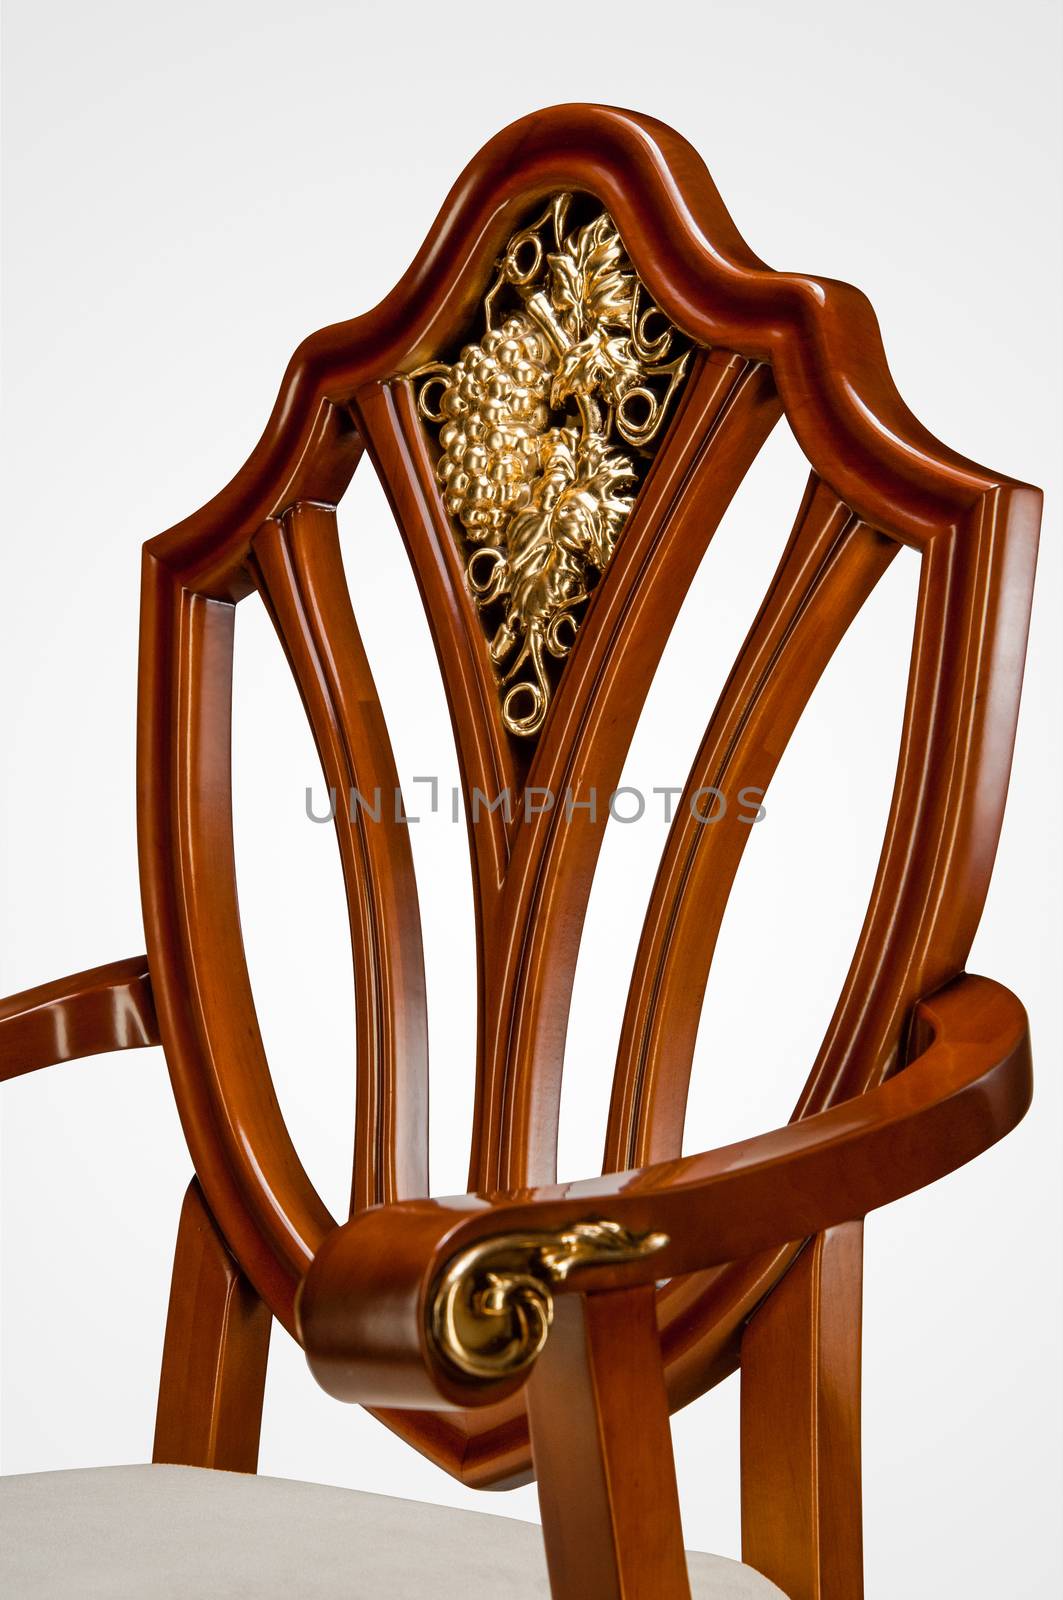 Luxurious kitchen chair by A_Karim